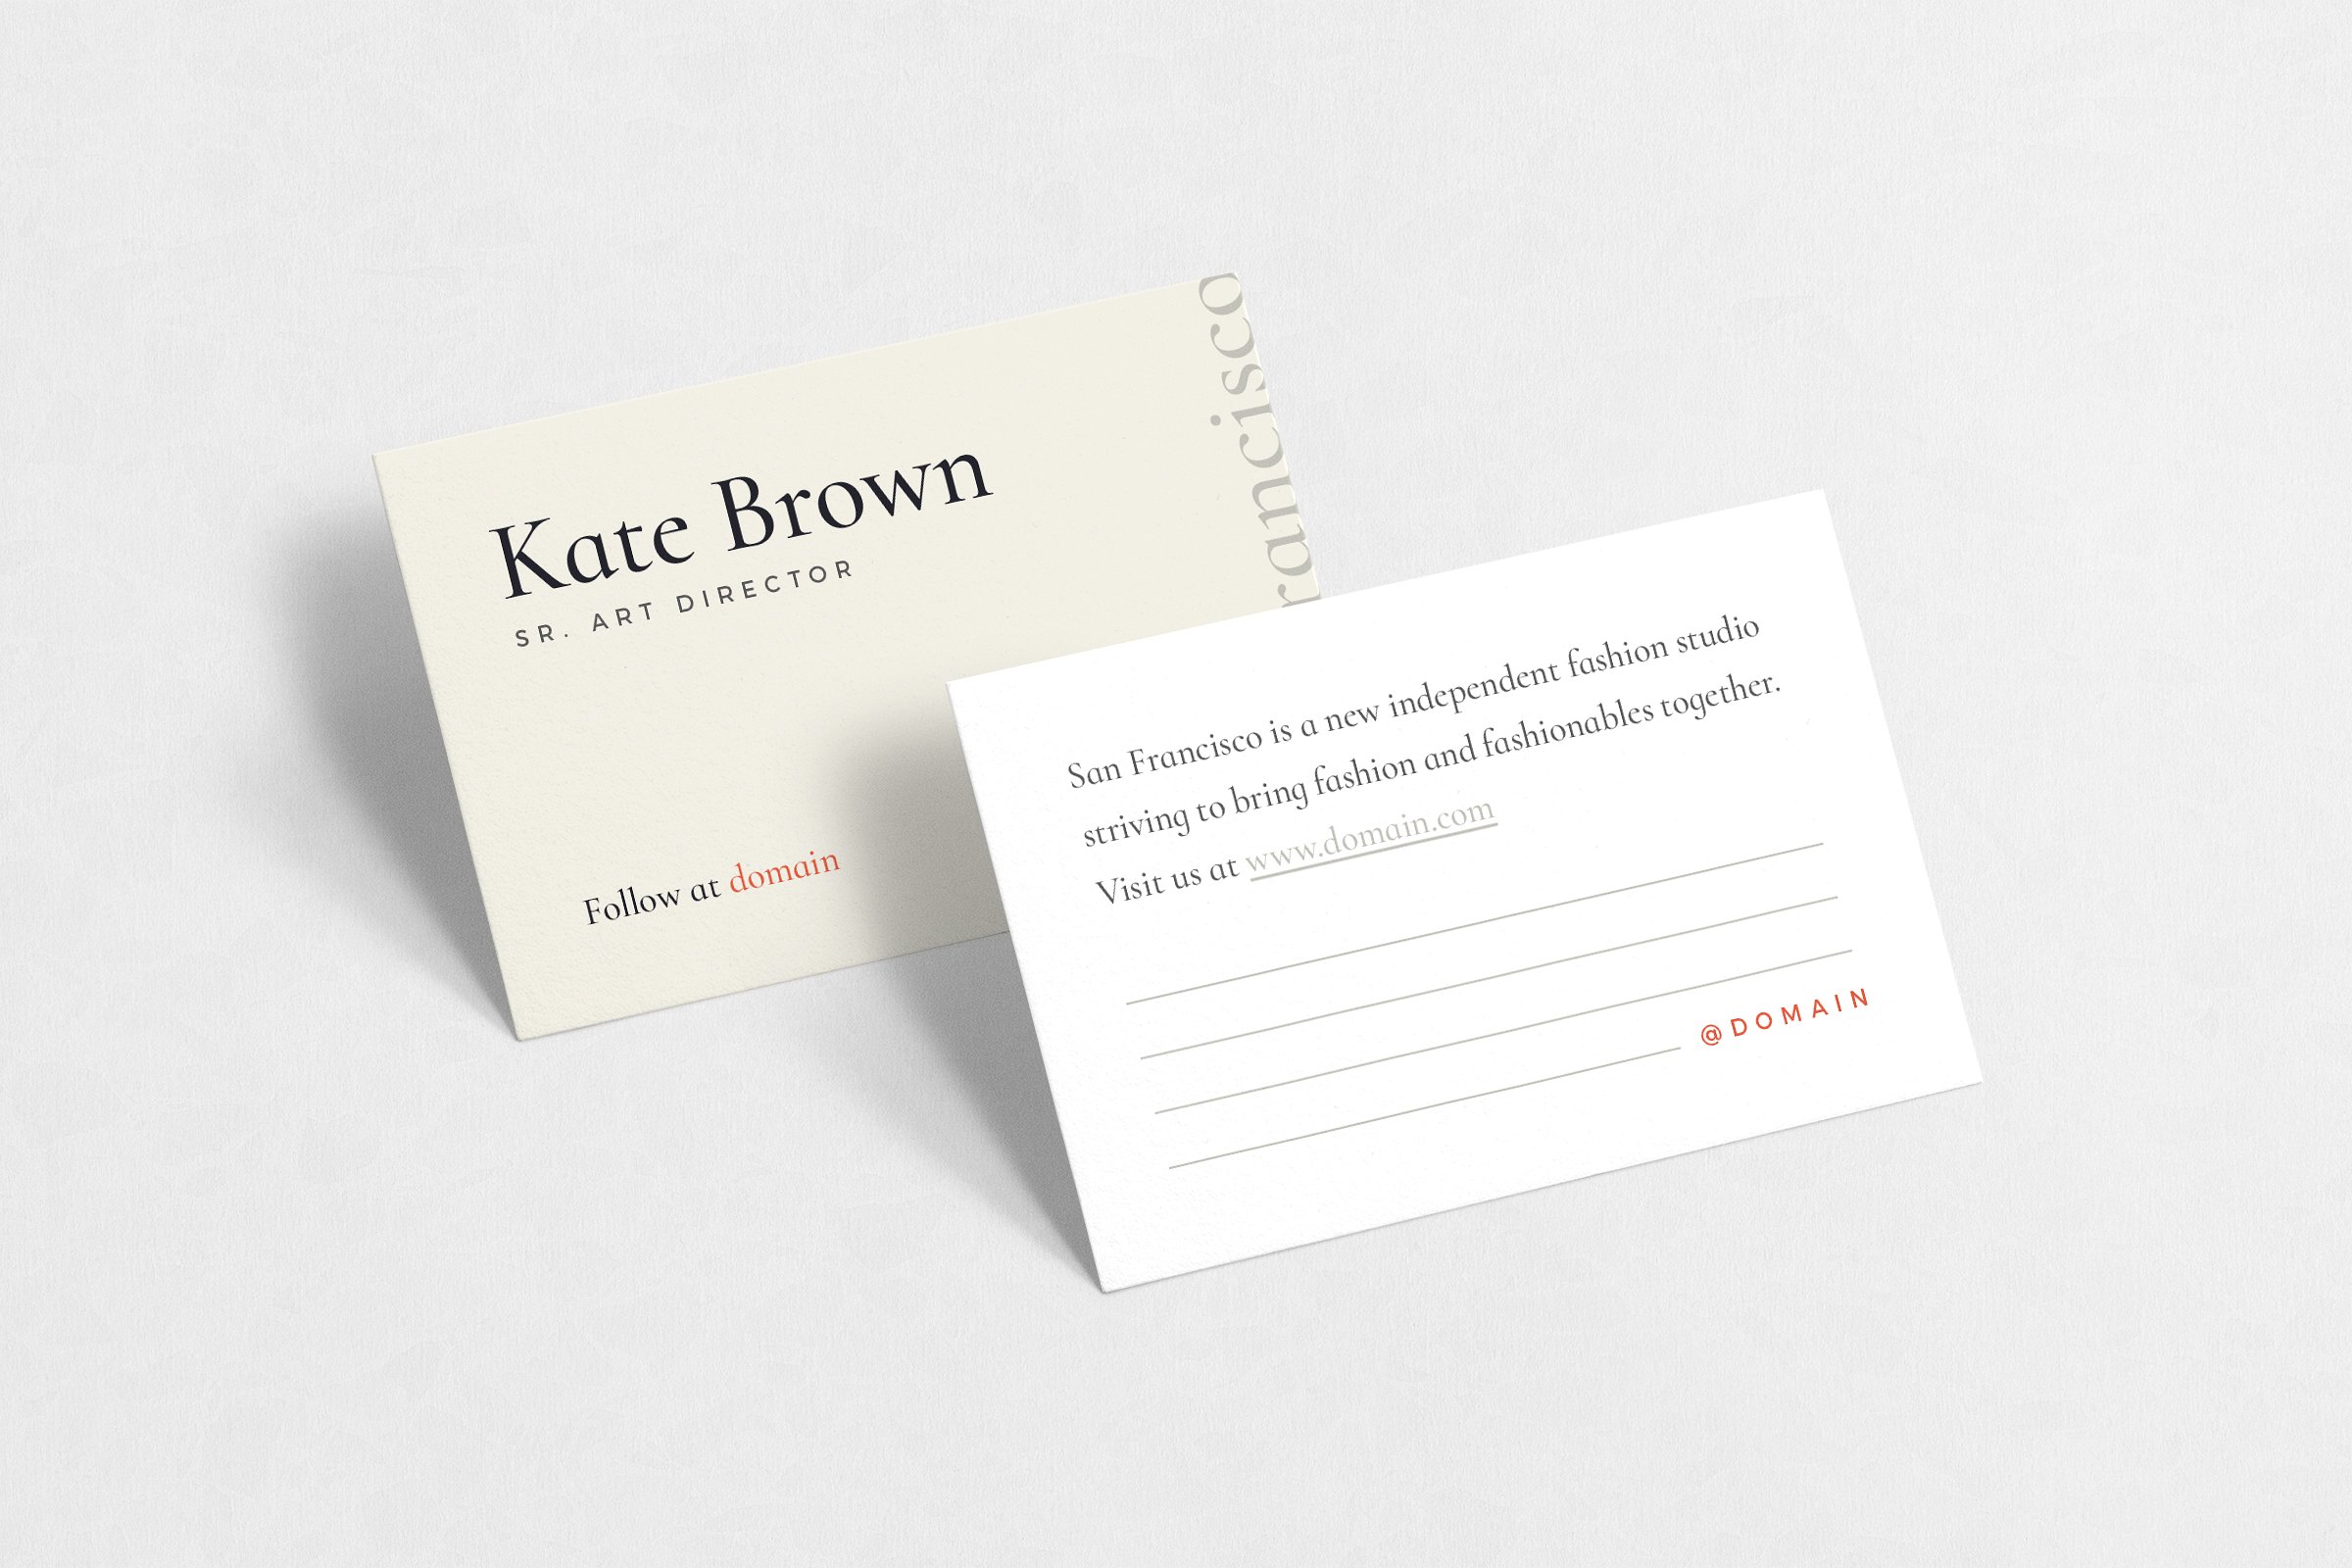 极简主义企业名片设计模板1 San Francisco Business Cards插图(3)